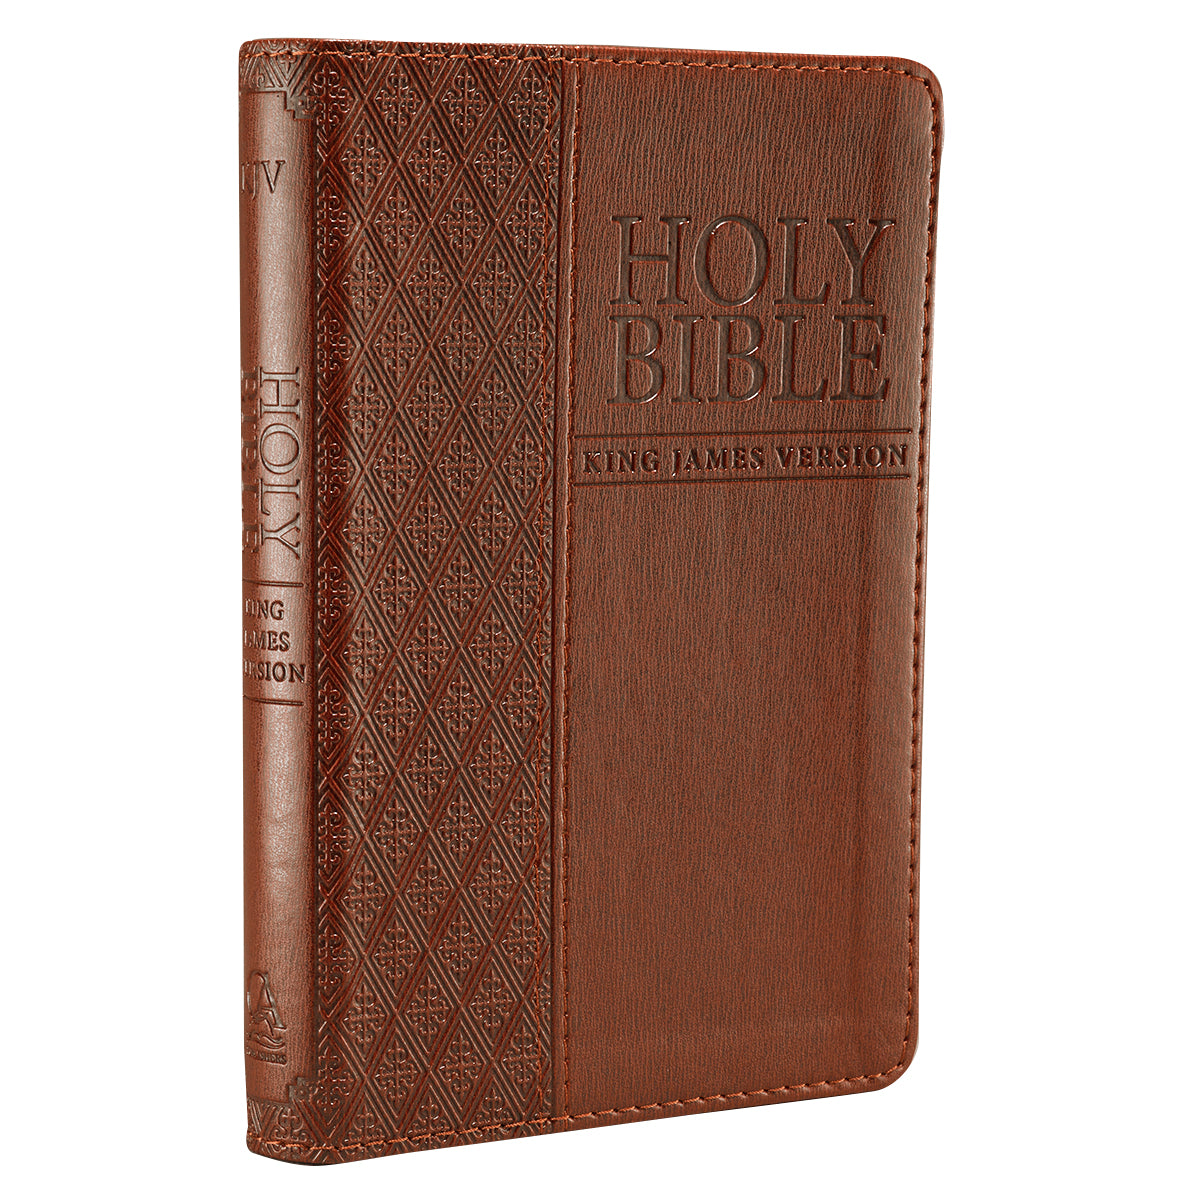 Image of KJV Pocket Bible, Brown, Imitation Leather, Verse Finder, One Year Reading Plan, Presentation Page, Ribbon Marker, Gilt Edges other